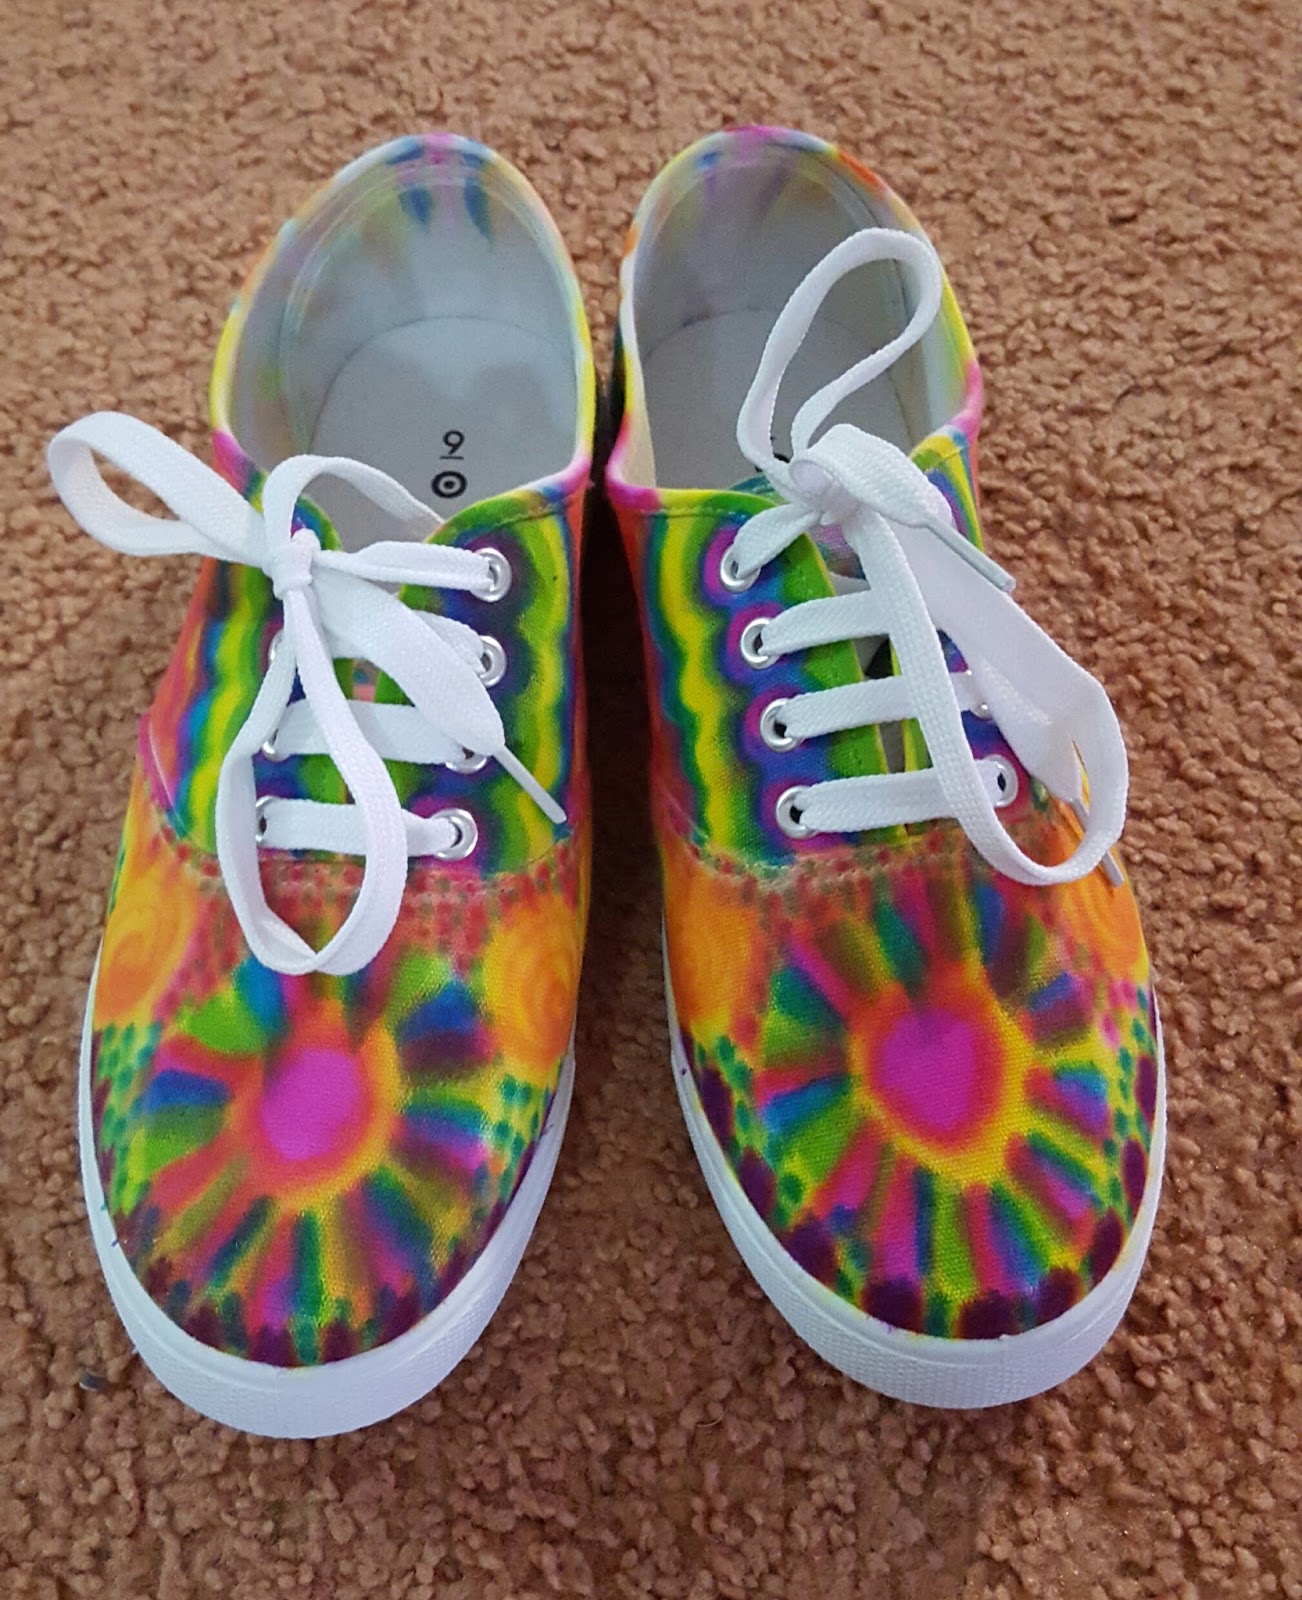 Craft SJ Inspired: Rainbow Shoes